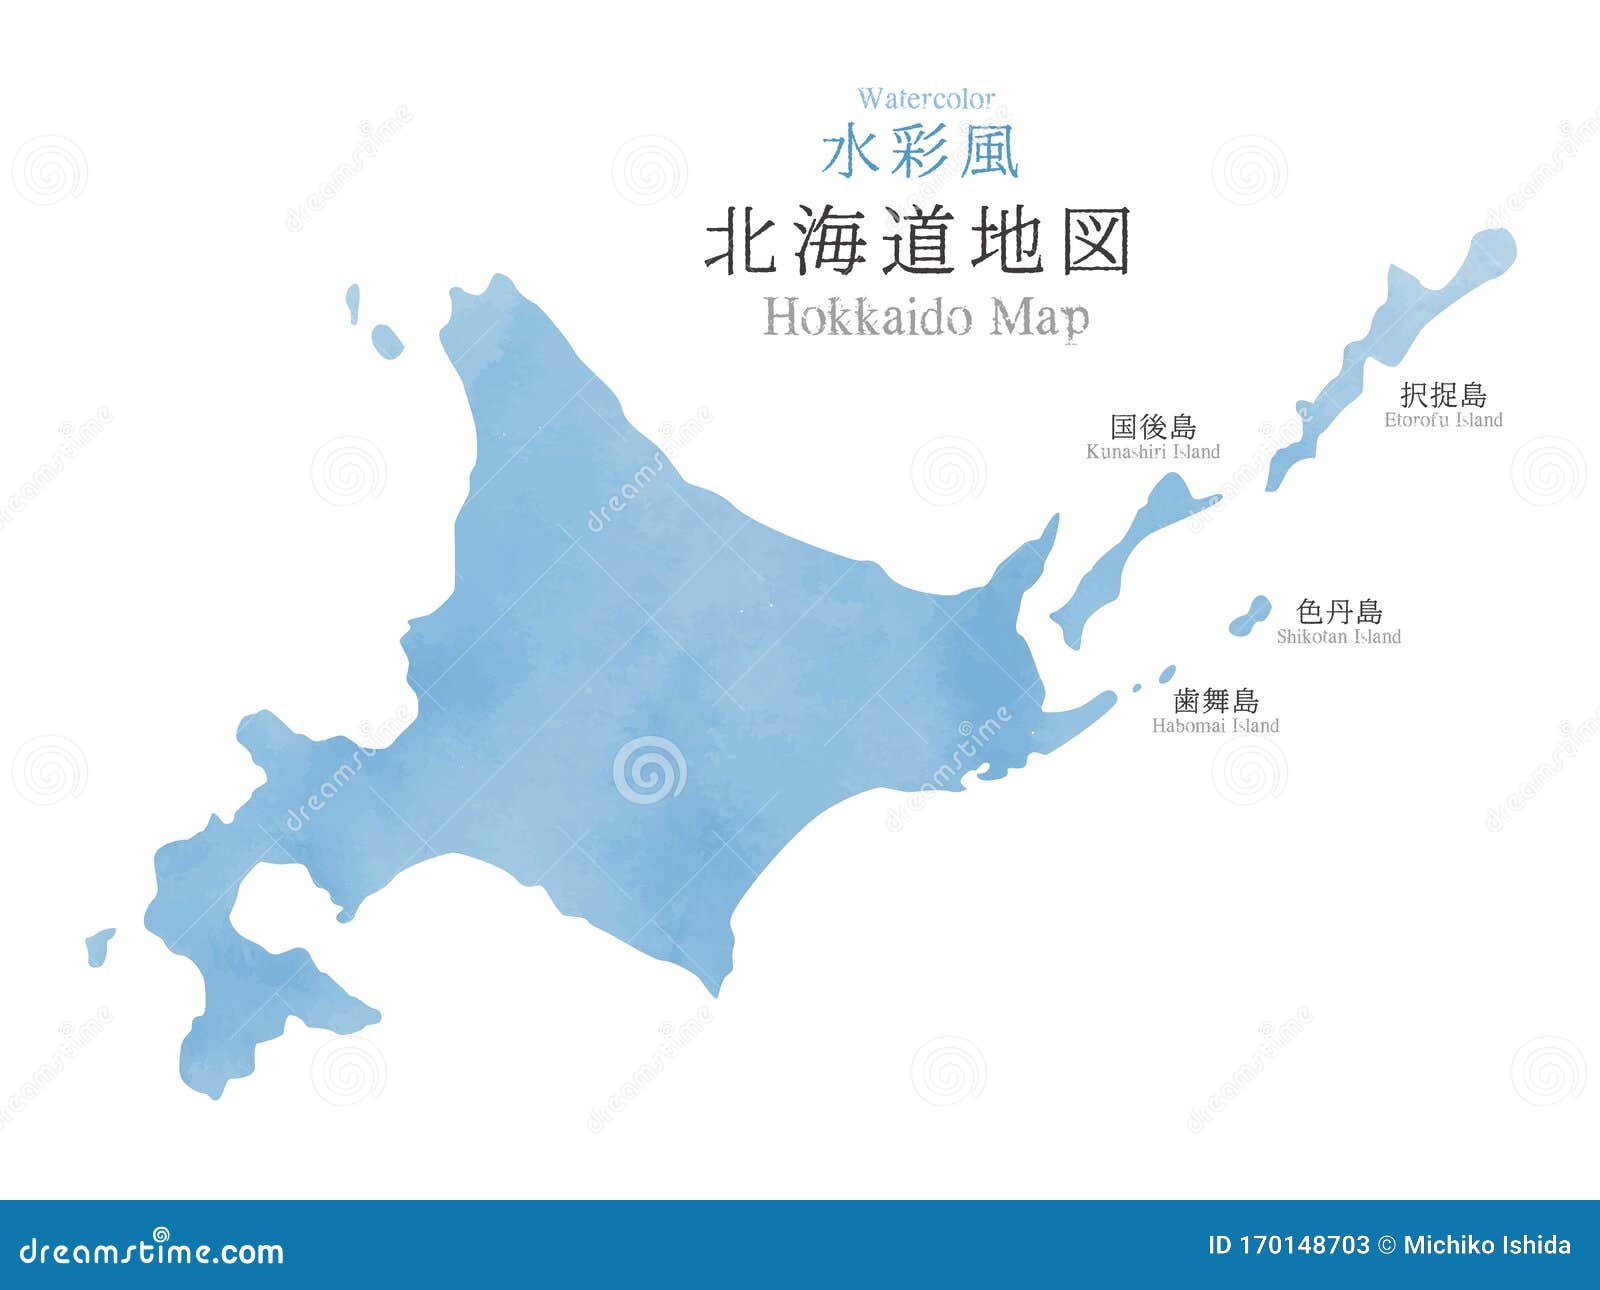 japan hokkaido region map with watercolor texture